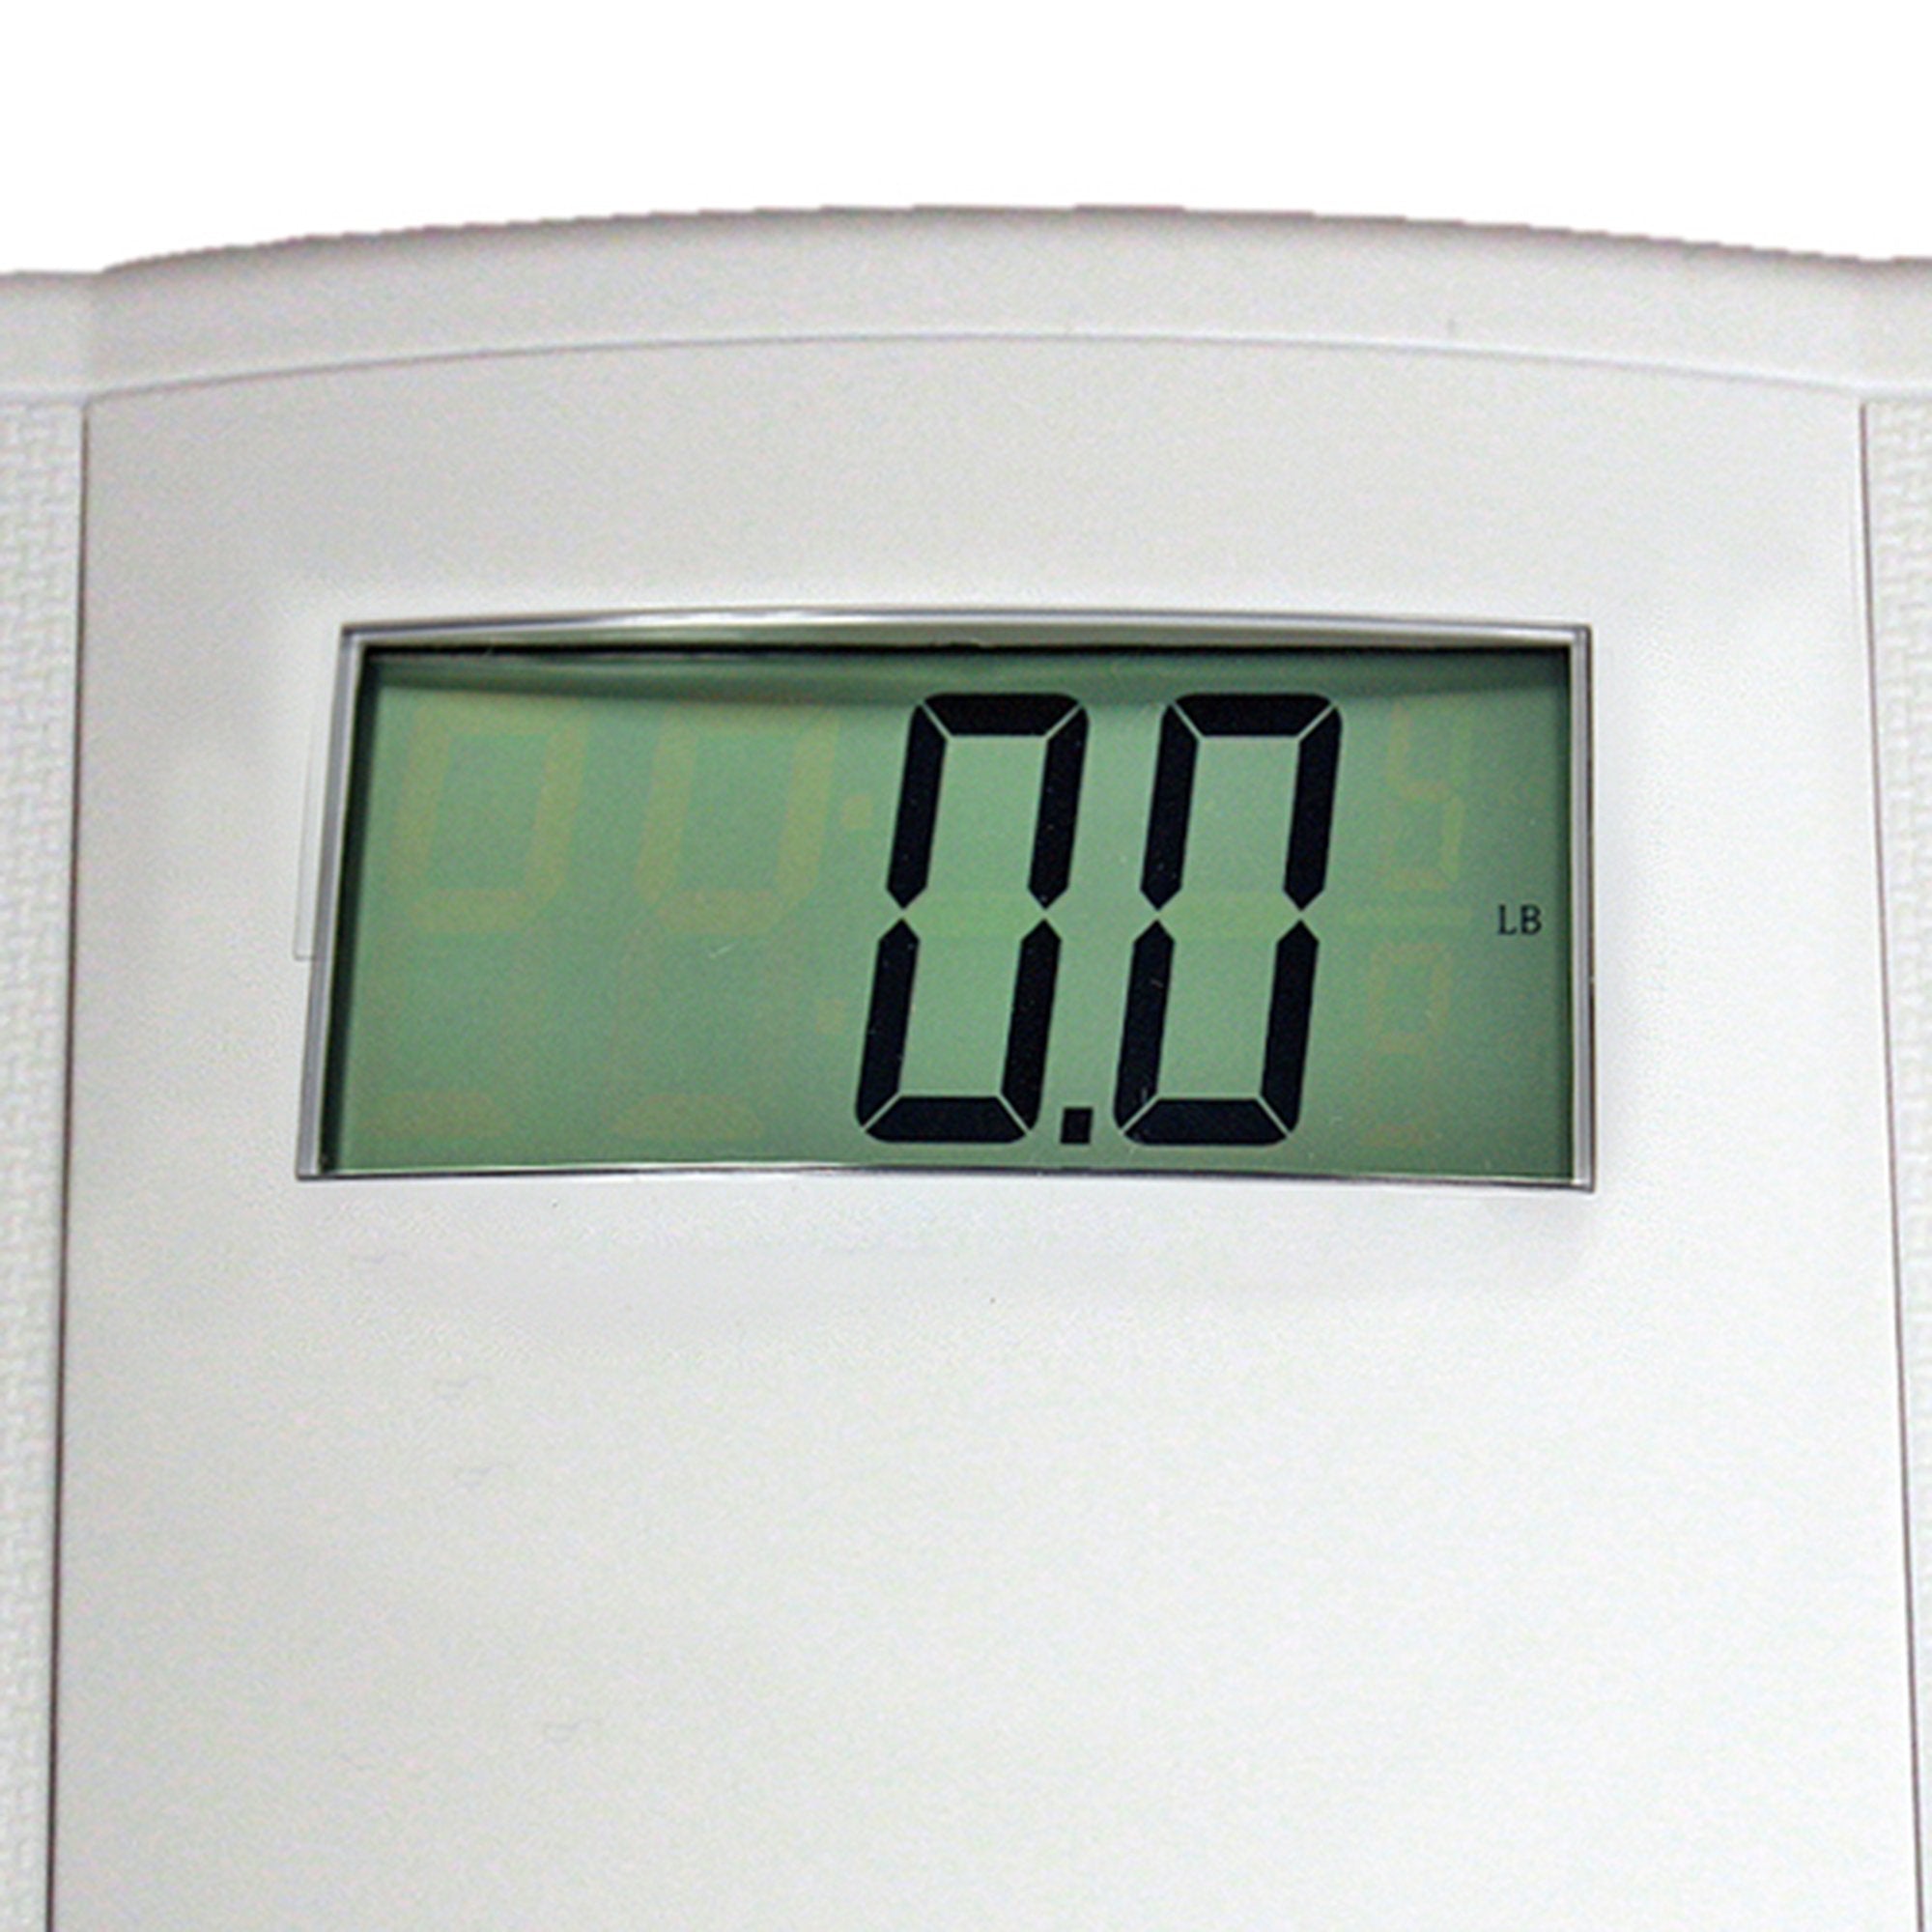 Floor Scale Health O Meter Digital Audio Display 550 lbs. / 250 kg Capacity White Battery Operated